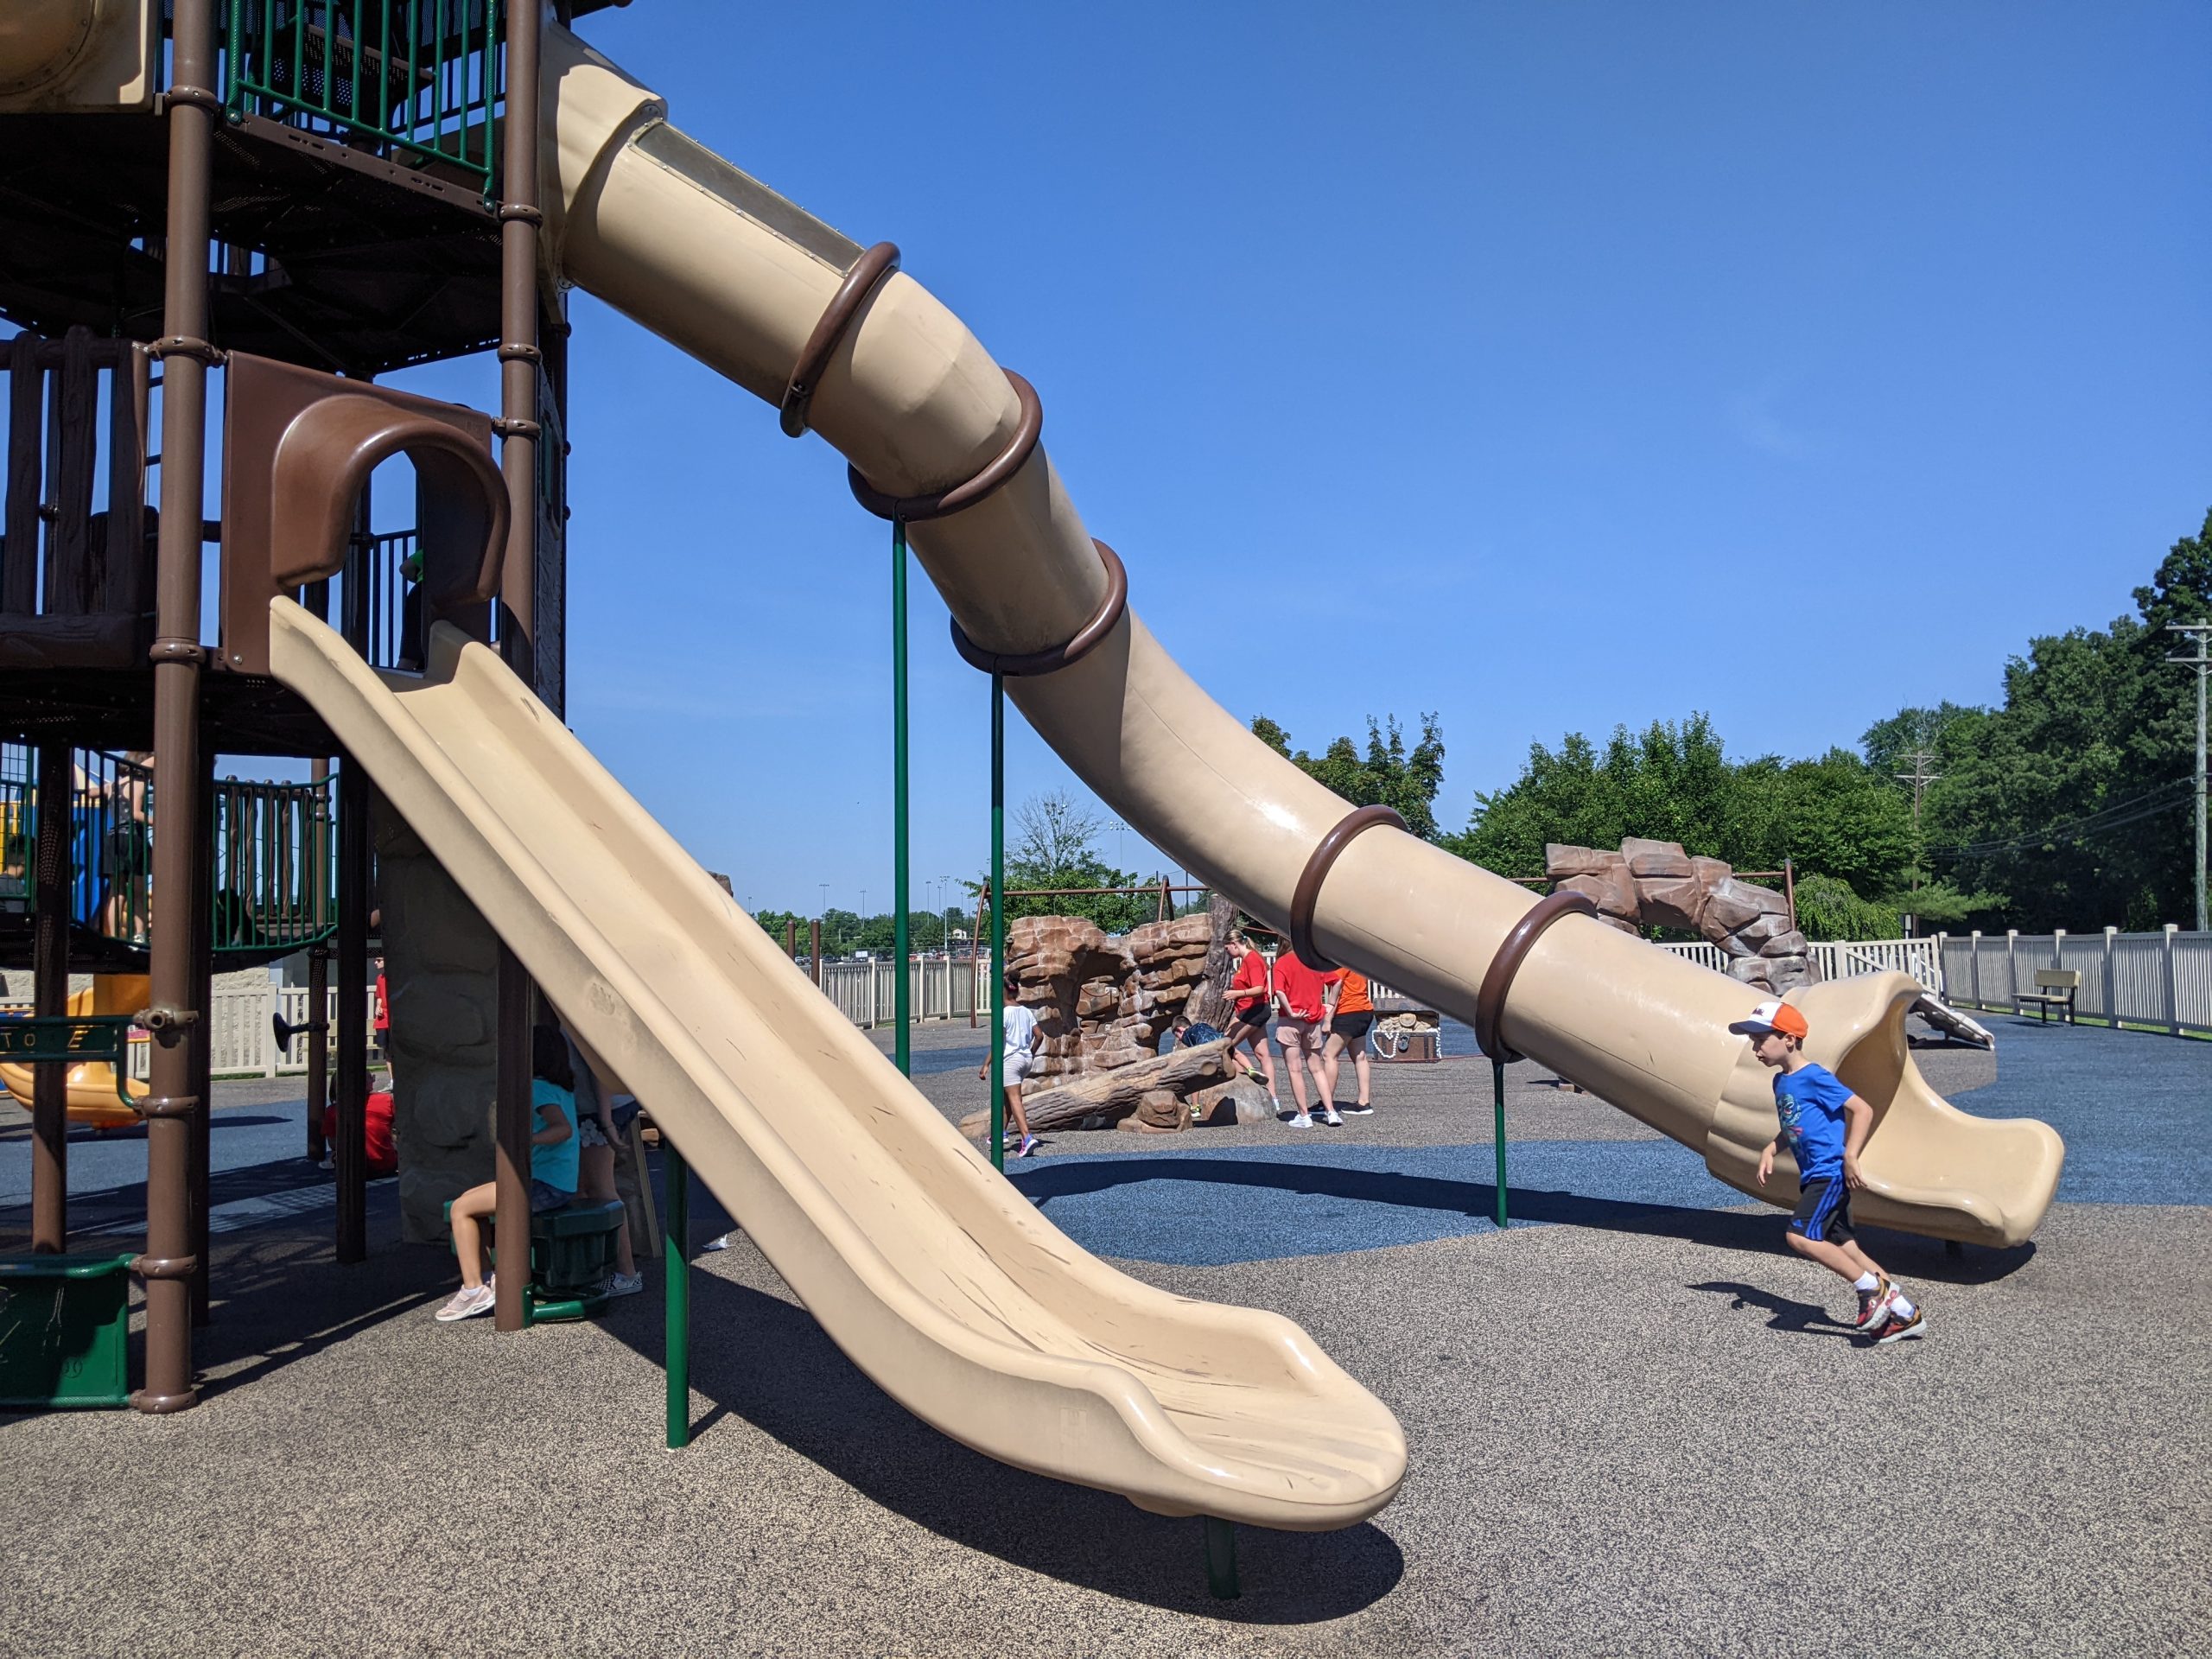 Memorial Park Playground in Marlton NJ Slides 2 tan slide tunnel and open